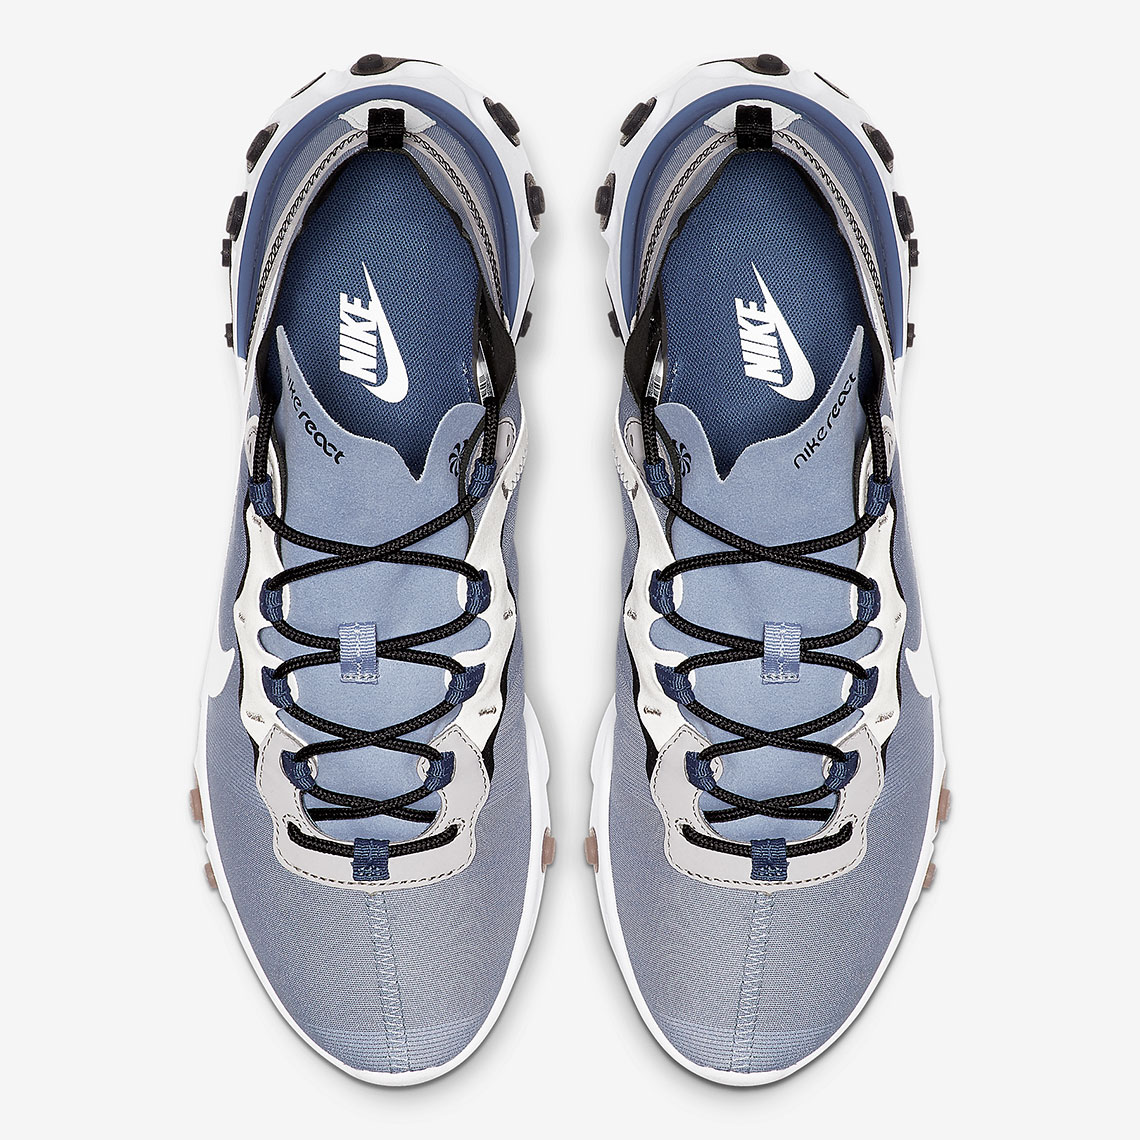 Nike React Element 55 Shoes Bq6166 402 Release Info Sneakernews Com